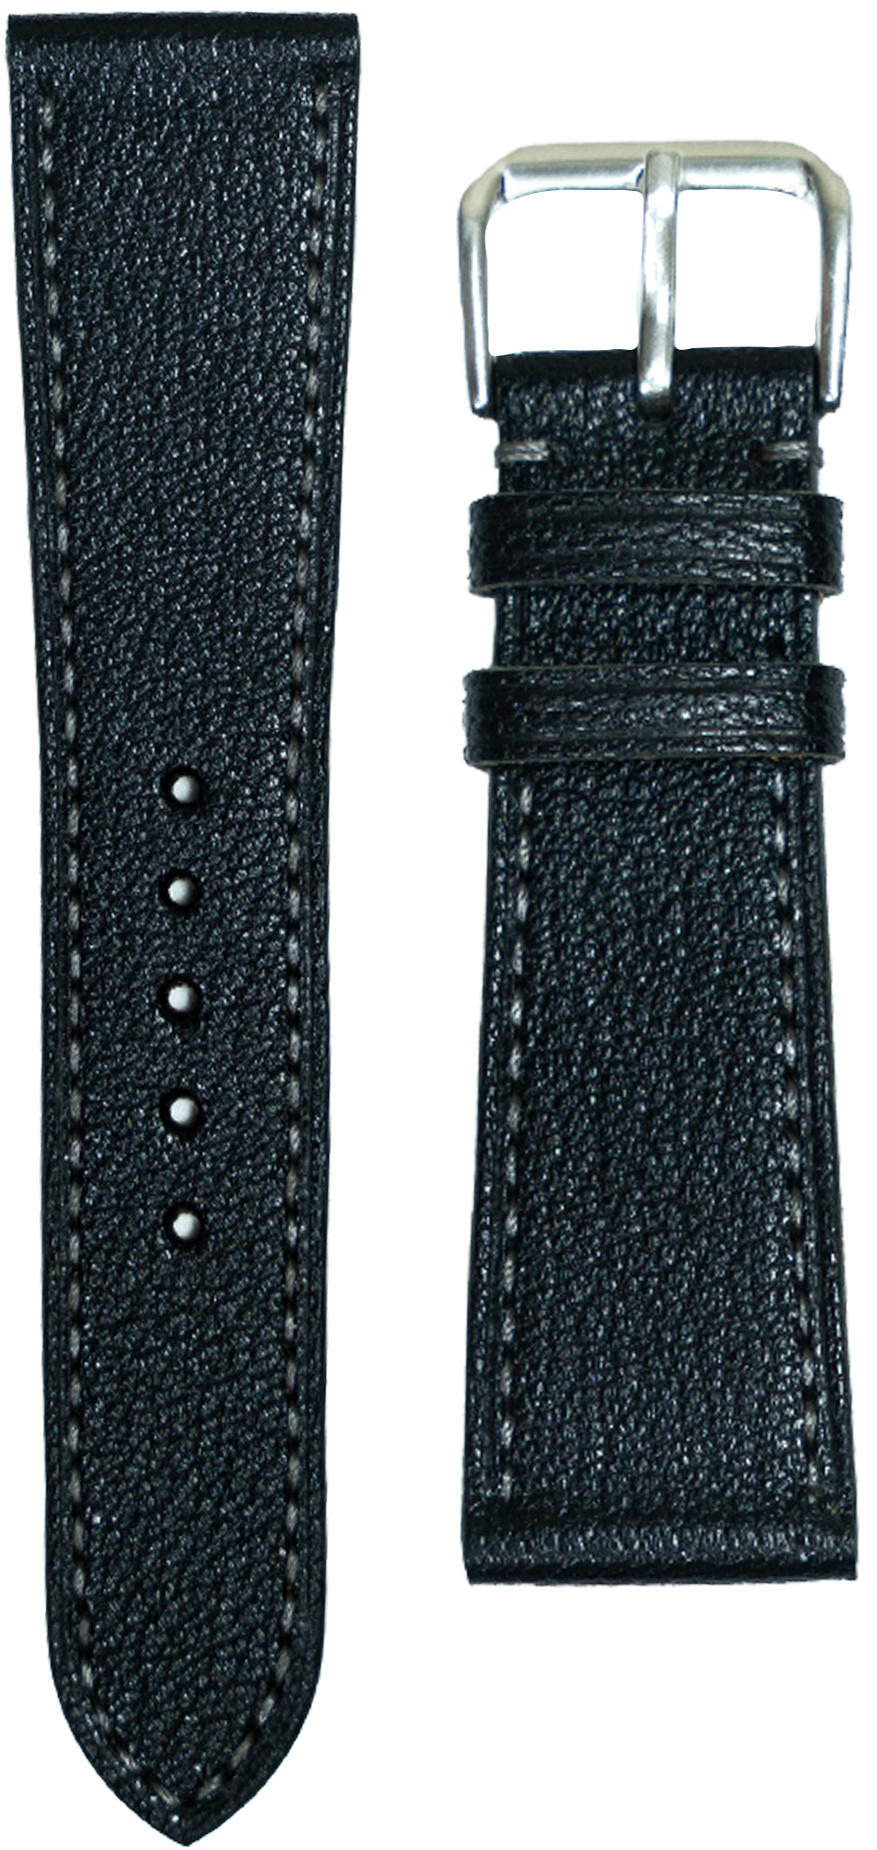 alran goat leather watch strap - black